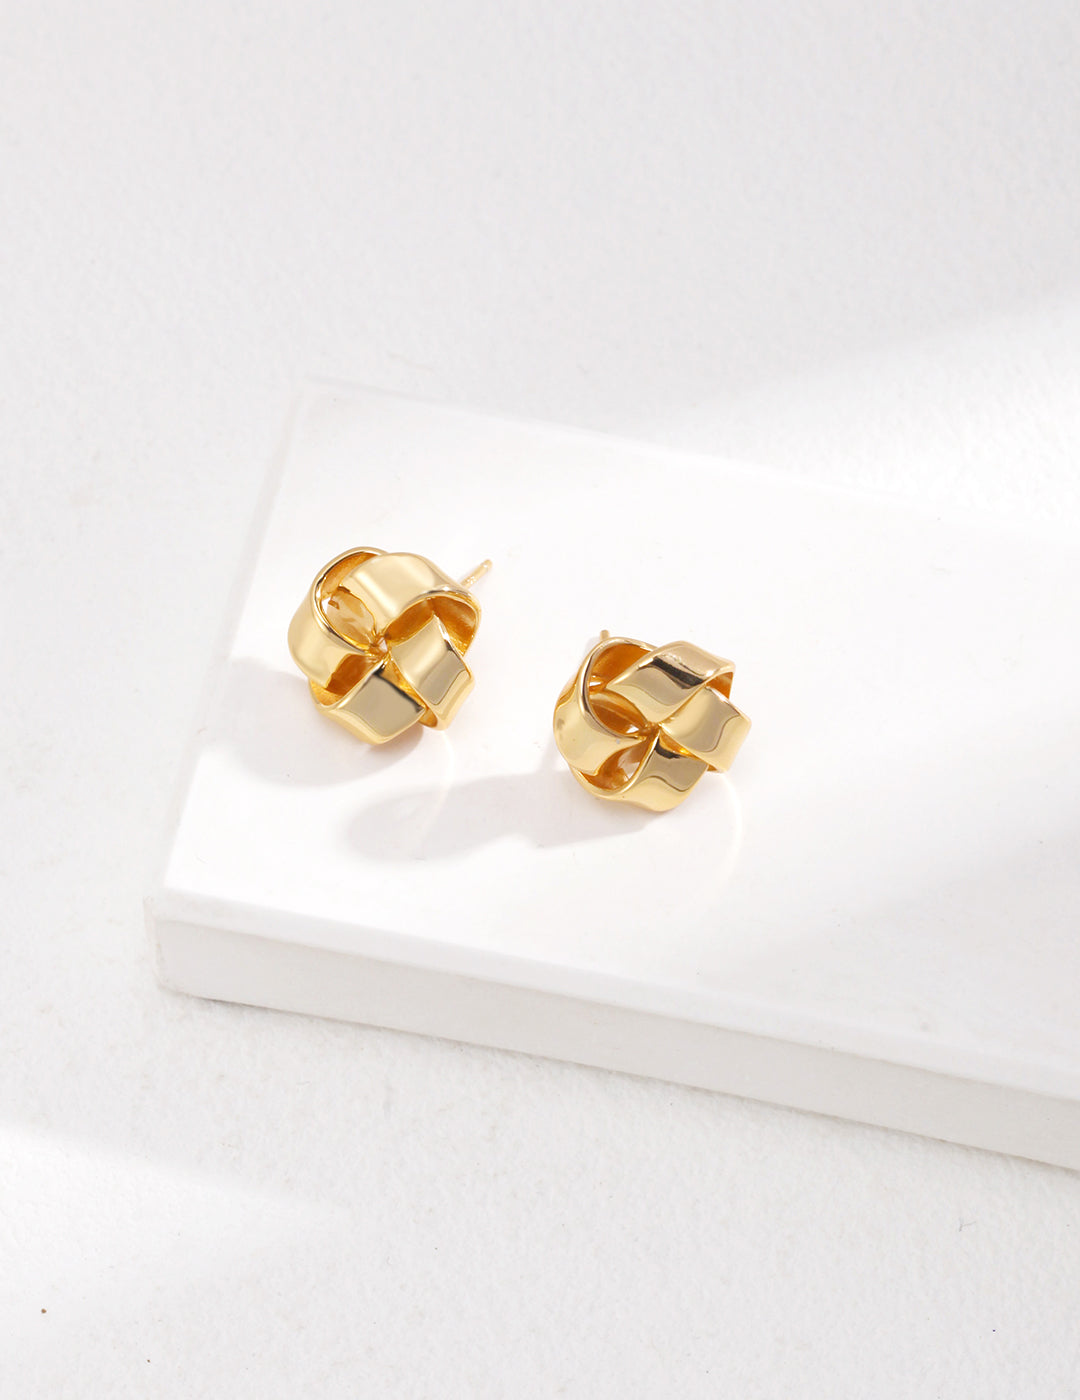 R01116 Shining Golden Shaped earrings